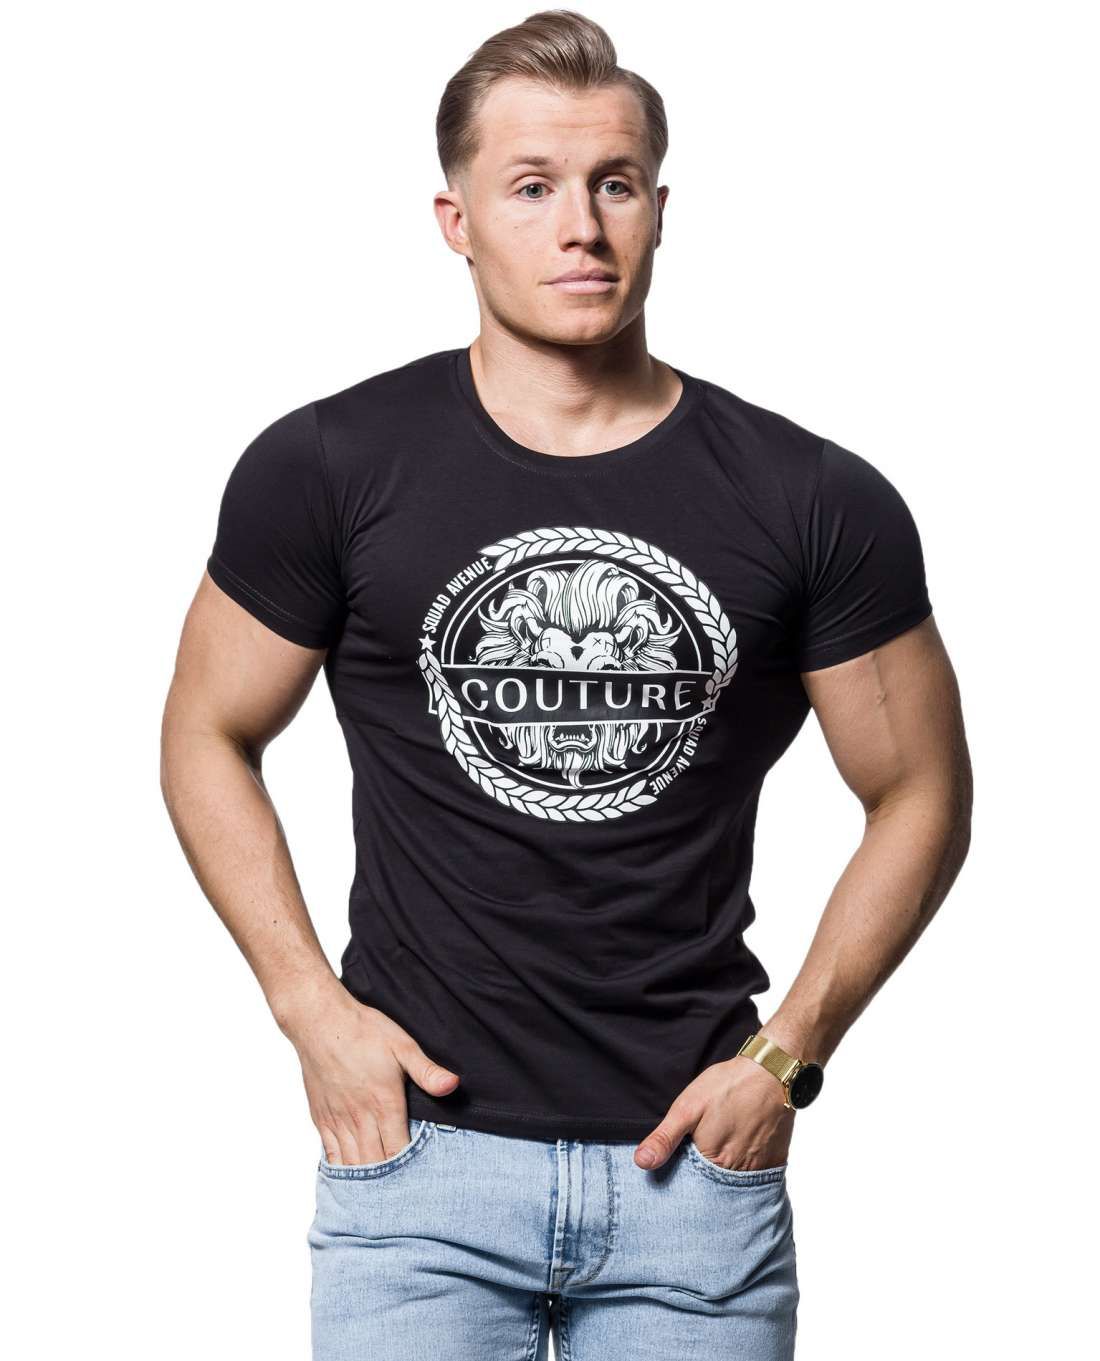 Tim Couture T-Shirt Black Jerone